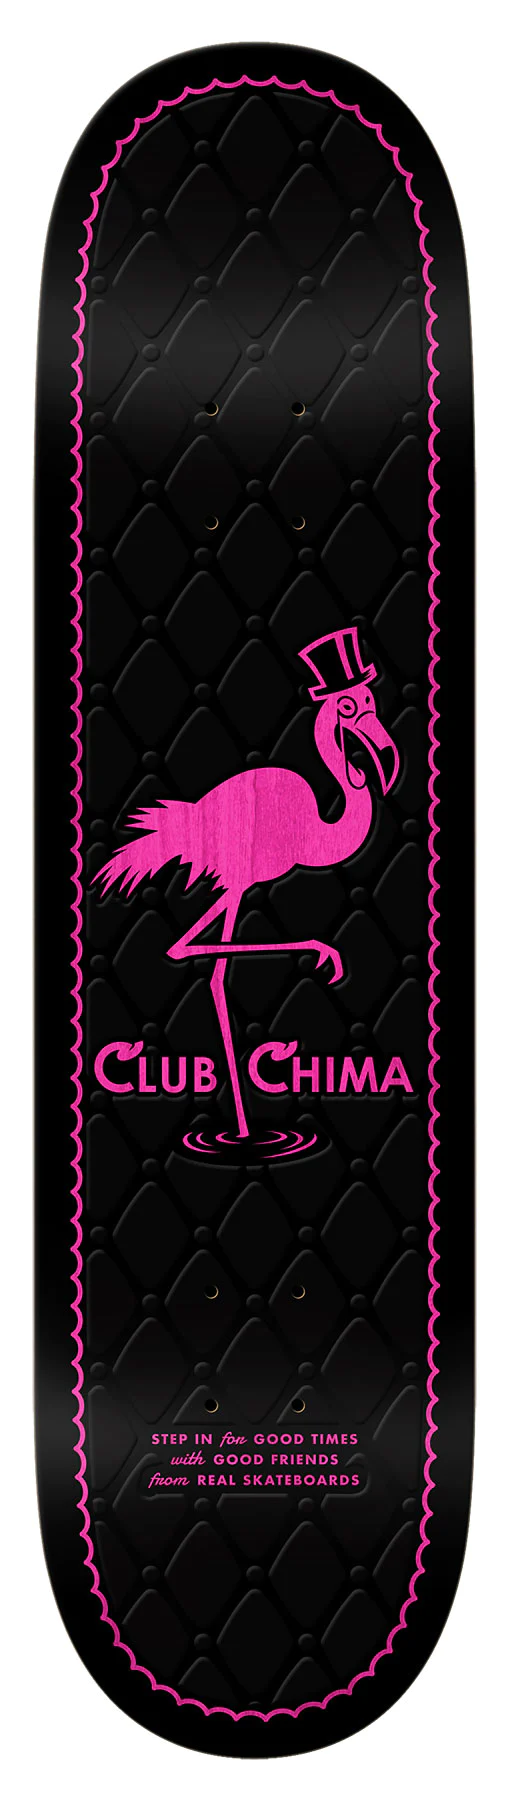 Real - Chima Club